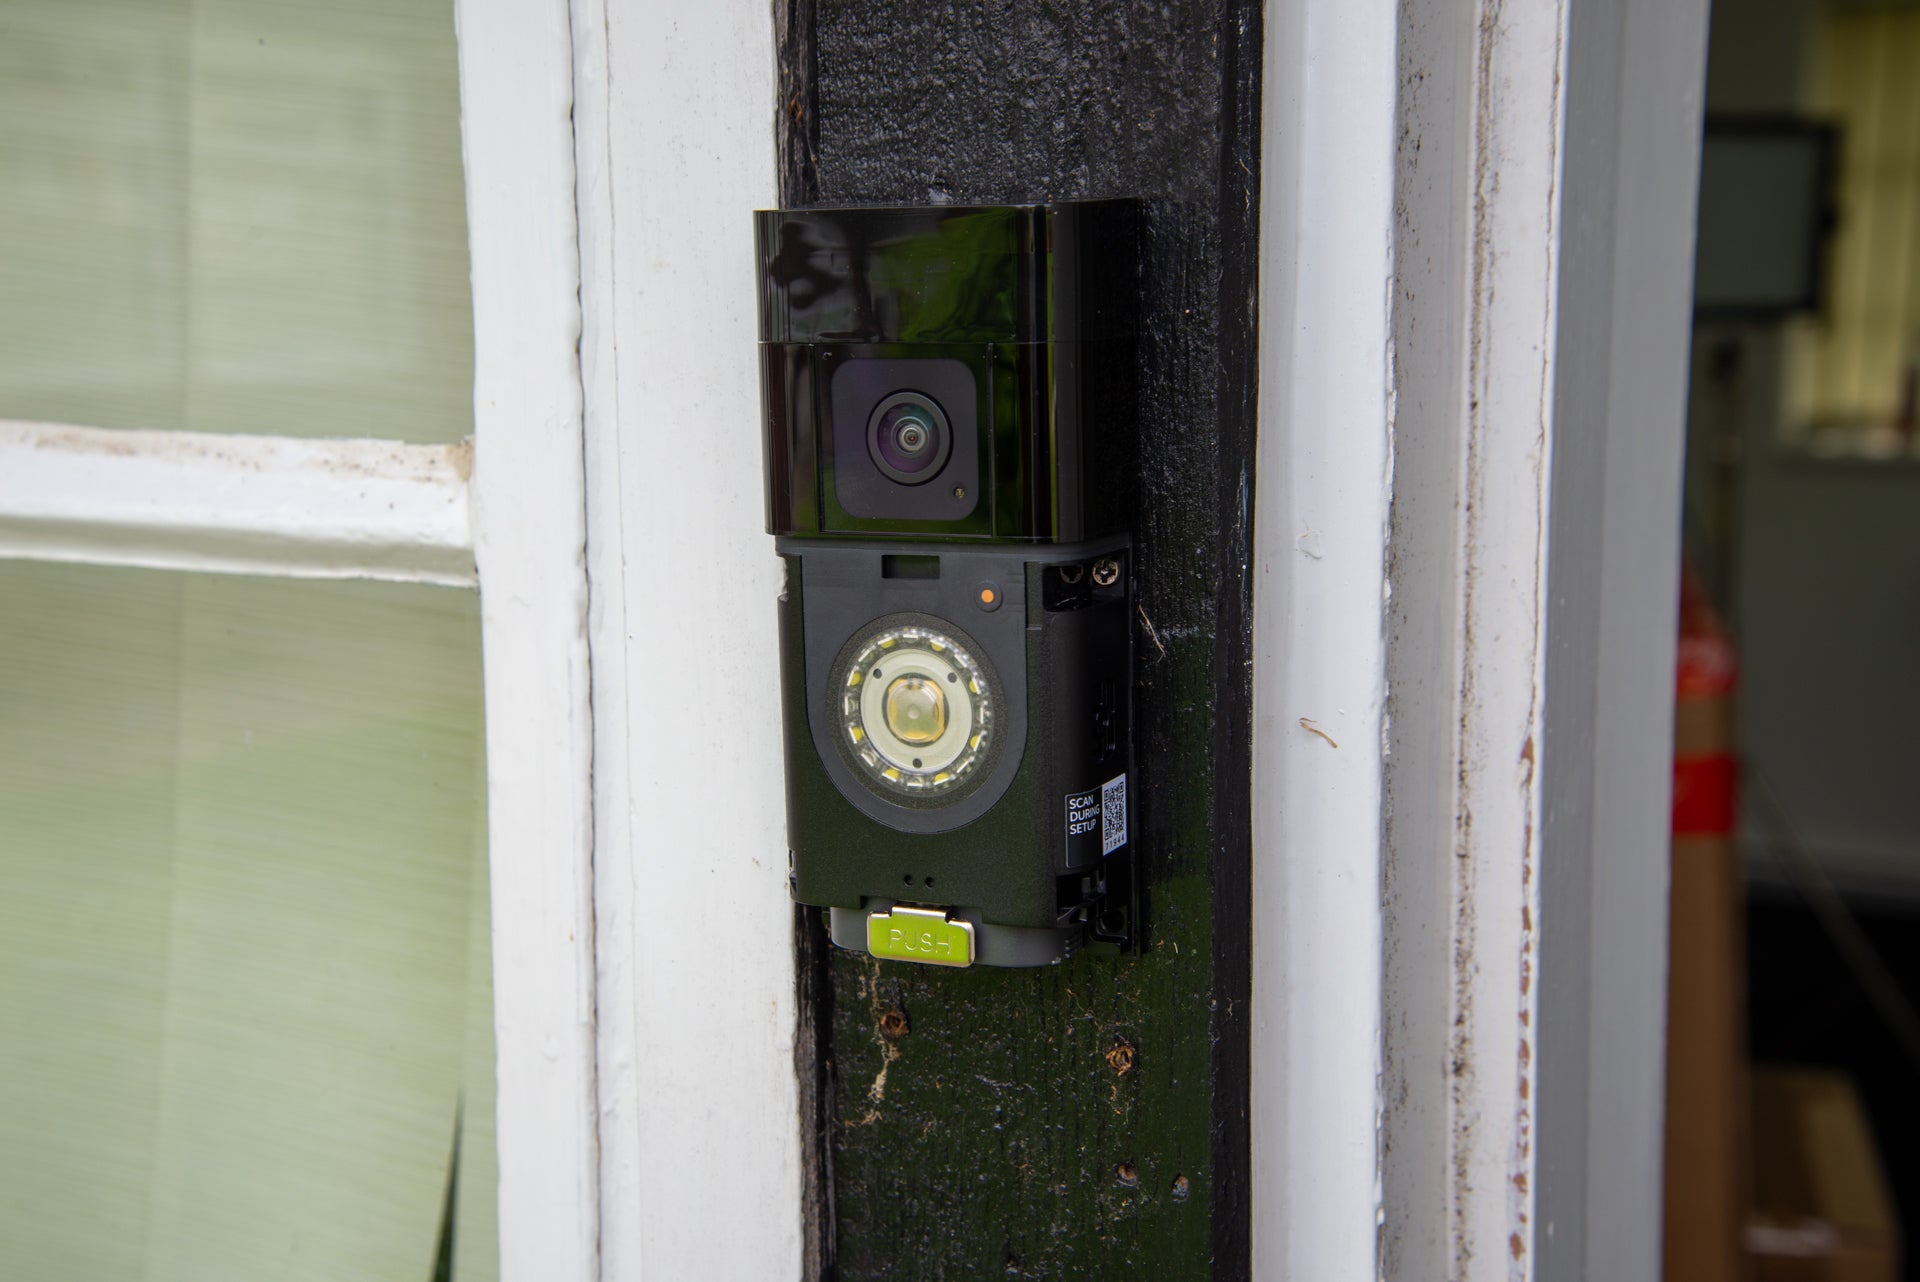 Ring Video Doorbell Plus installed